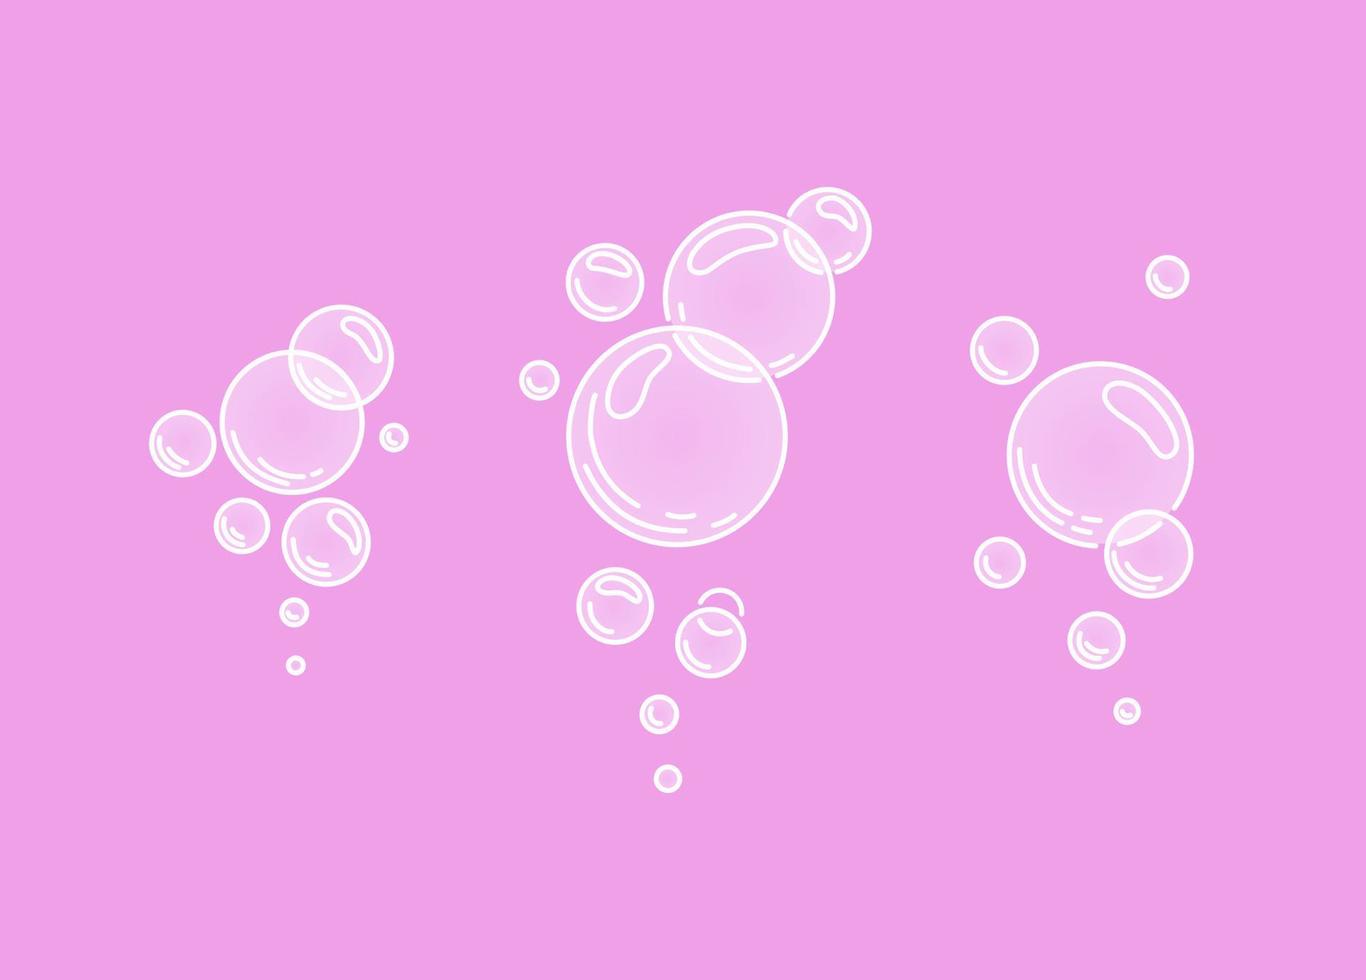 burbujas.burbujas de aire o agua burbujeantes sobre fondo rosa. chispas gaseosas. goma. ilustración de dibujos animados vectoriales. ilustración vectorial vector